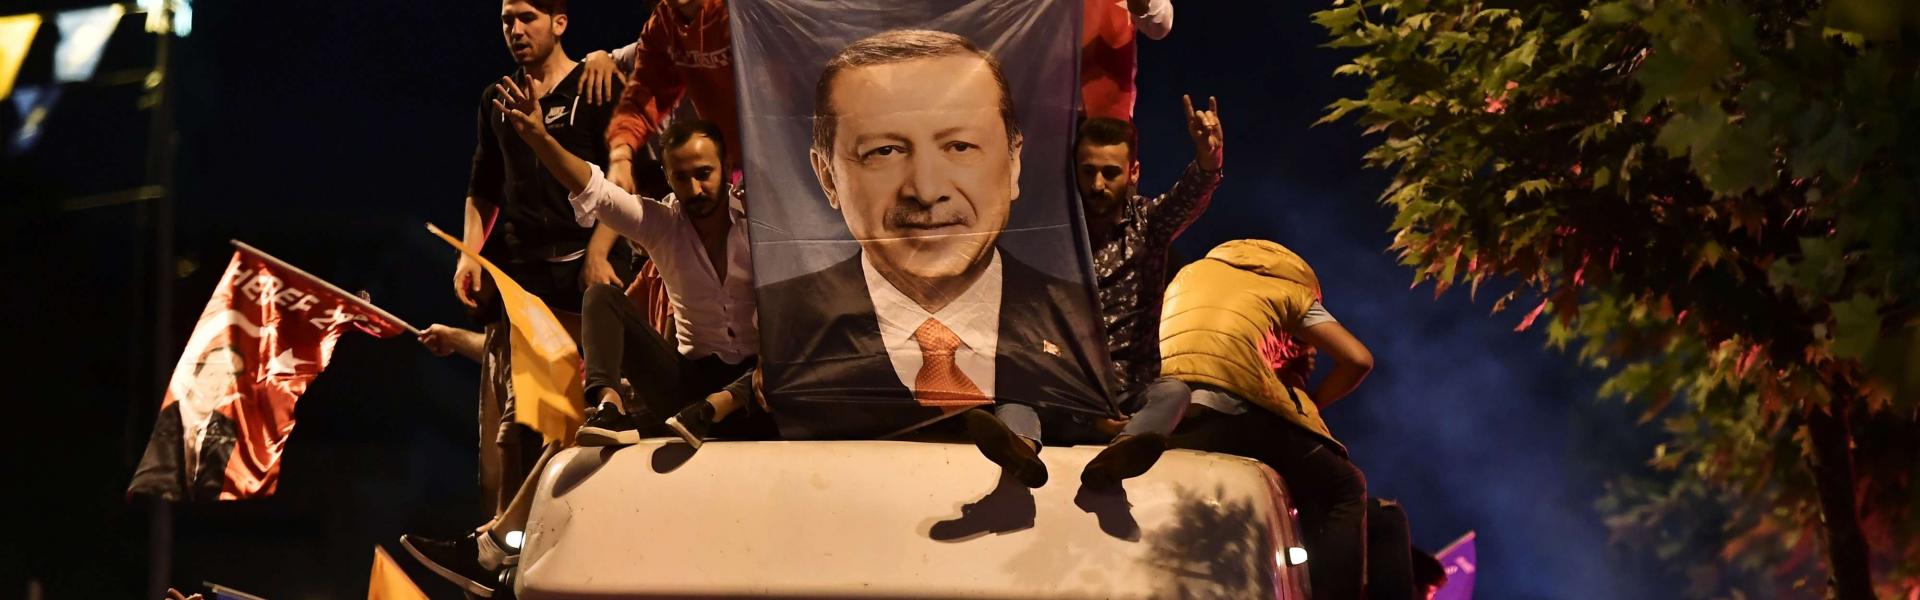 Turkey among increasing autocracies masquerading as democracies - analyst 1